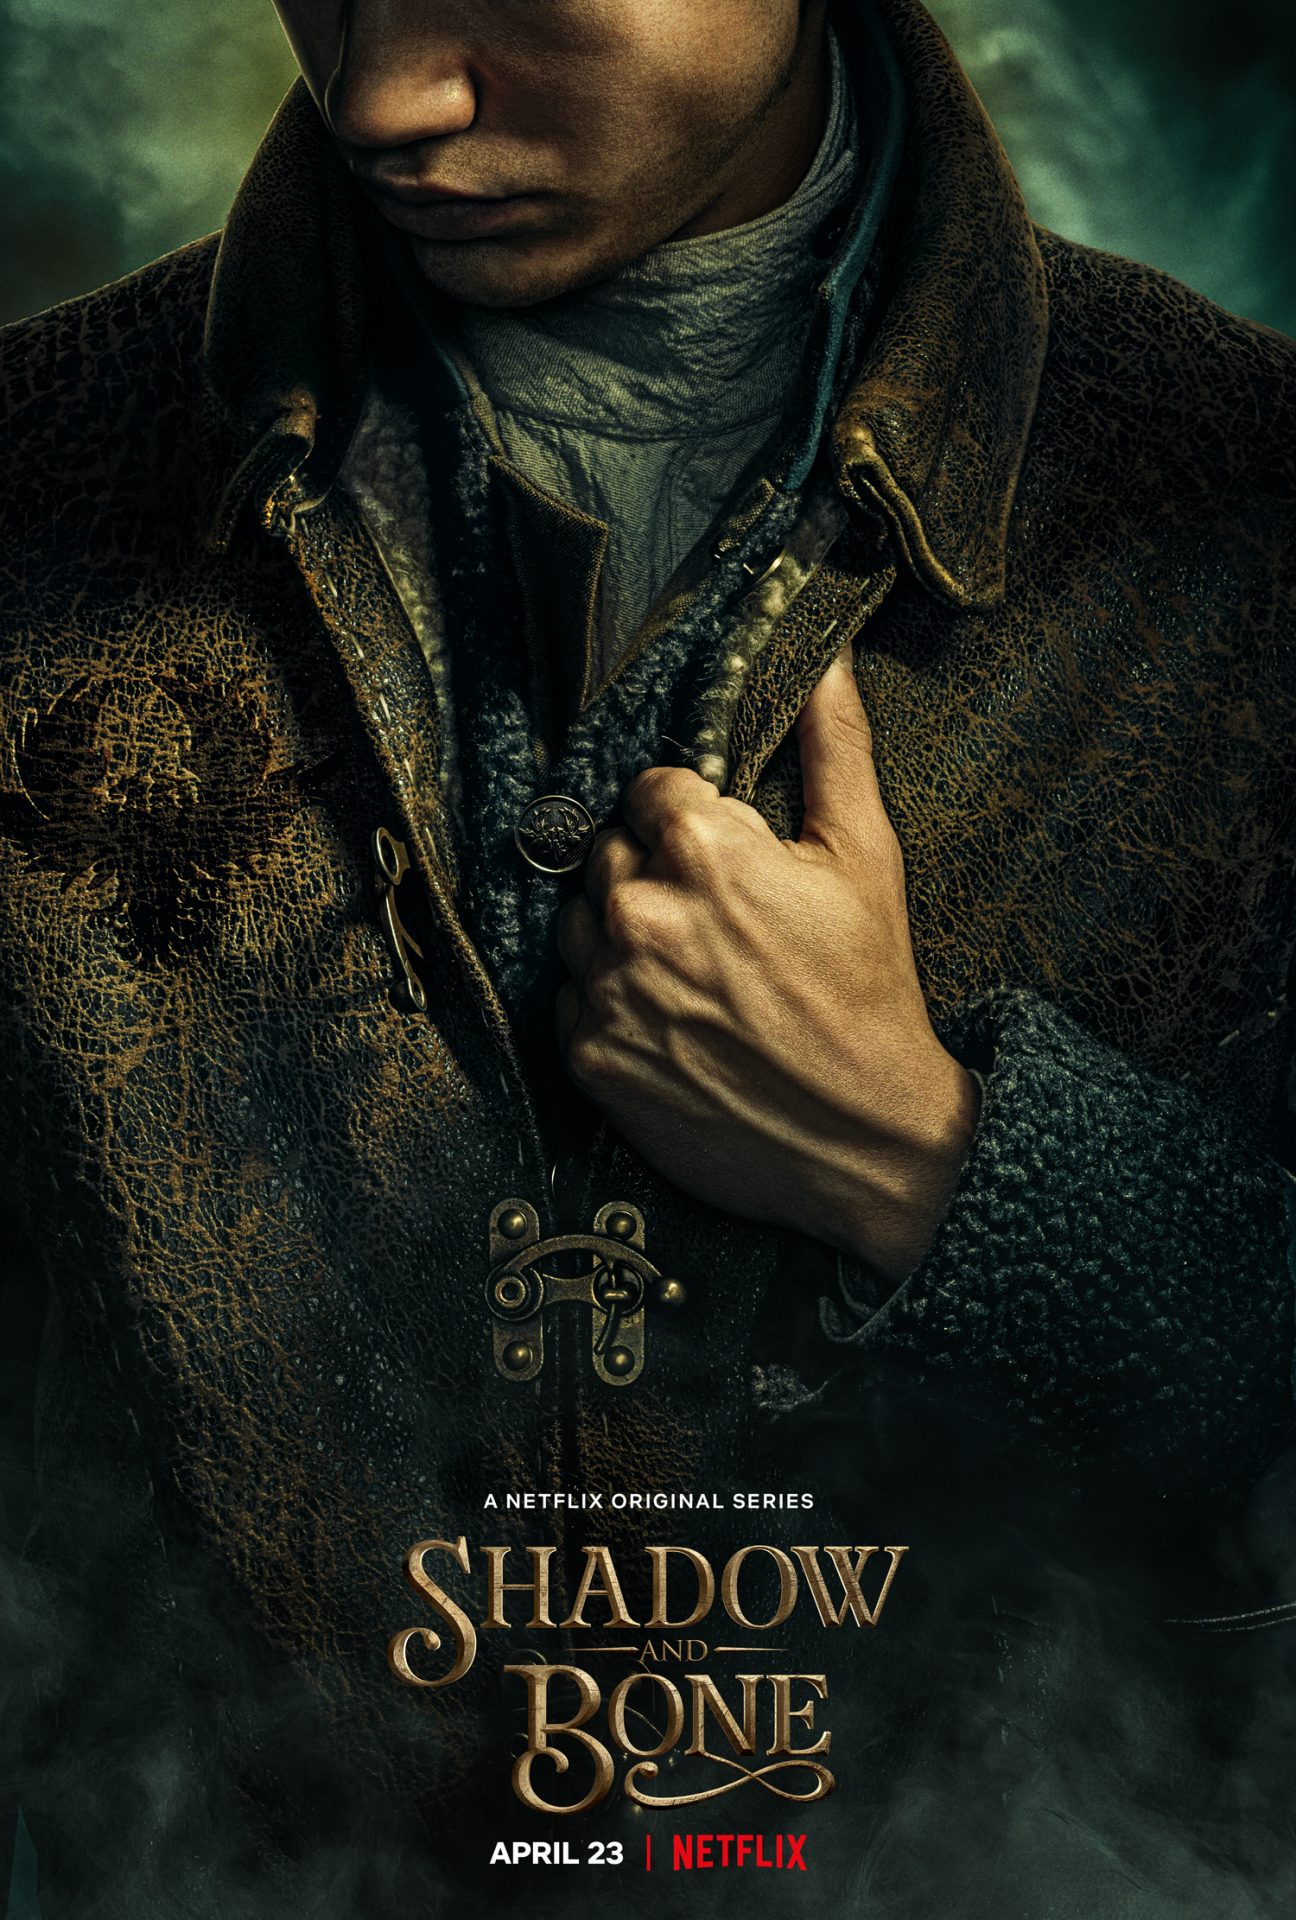 Shadow and Bone Mal character poster